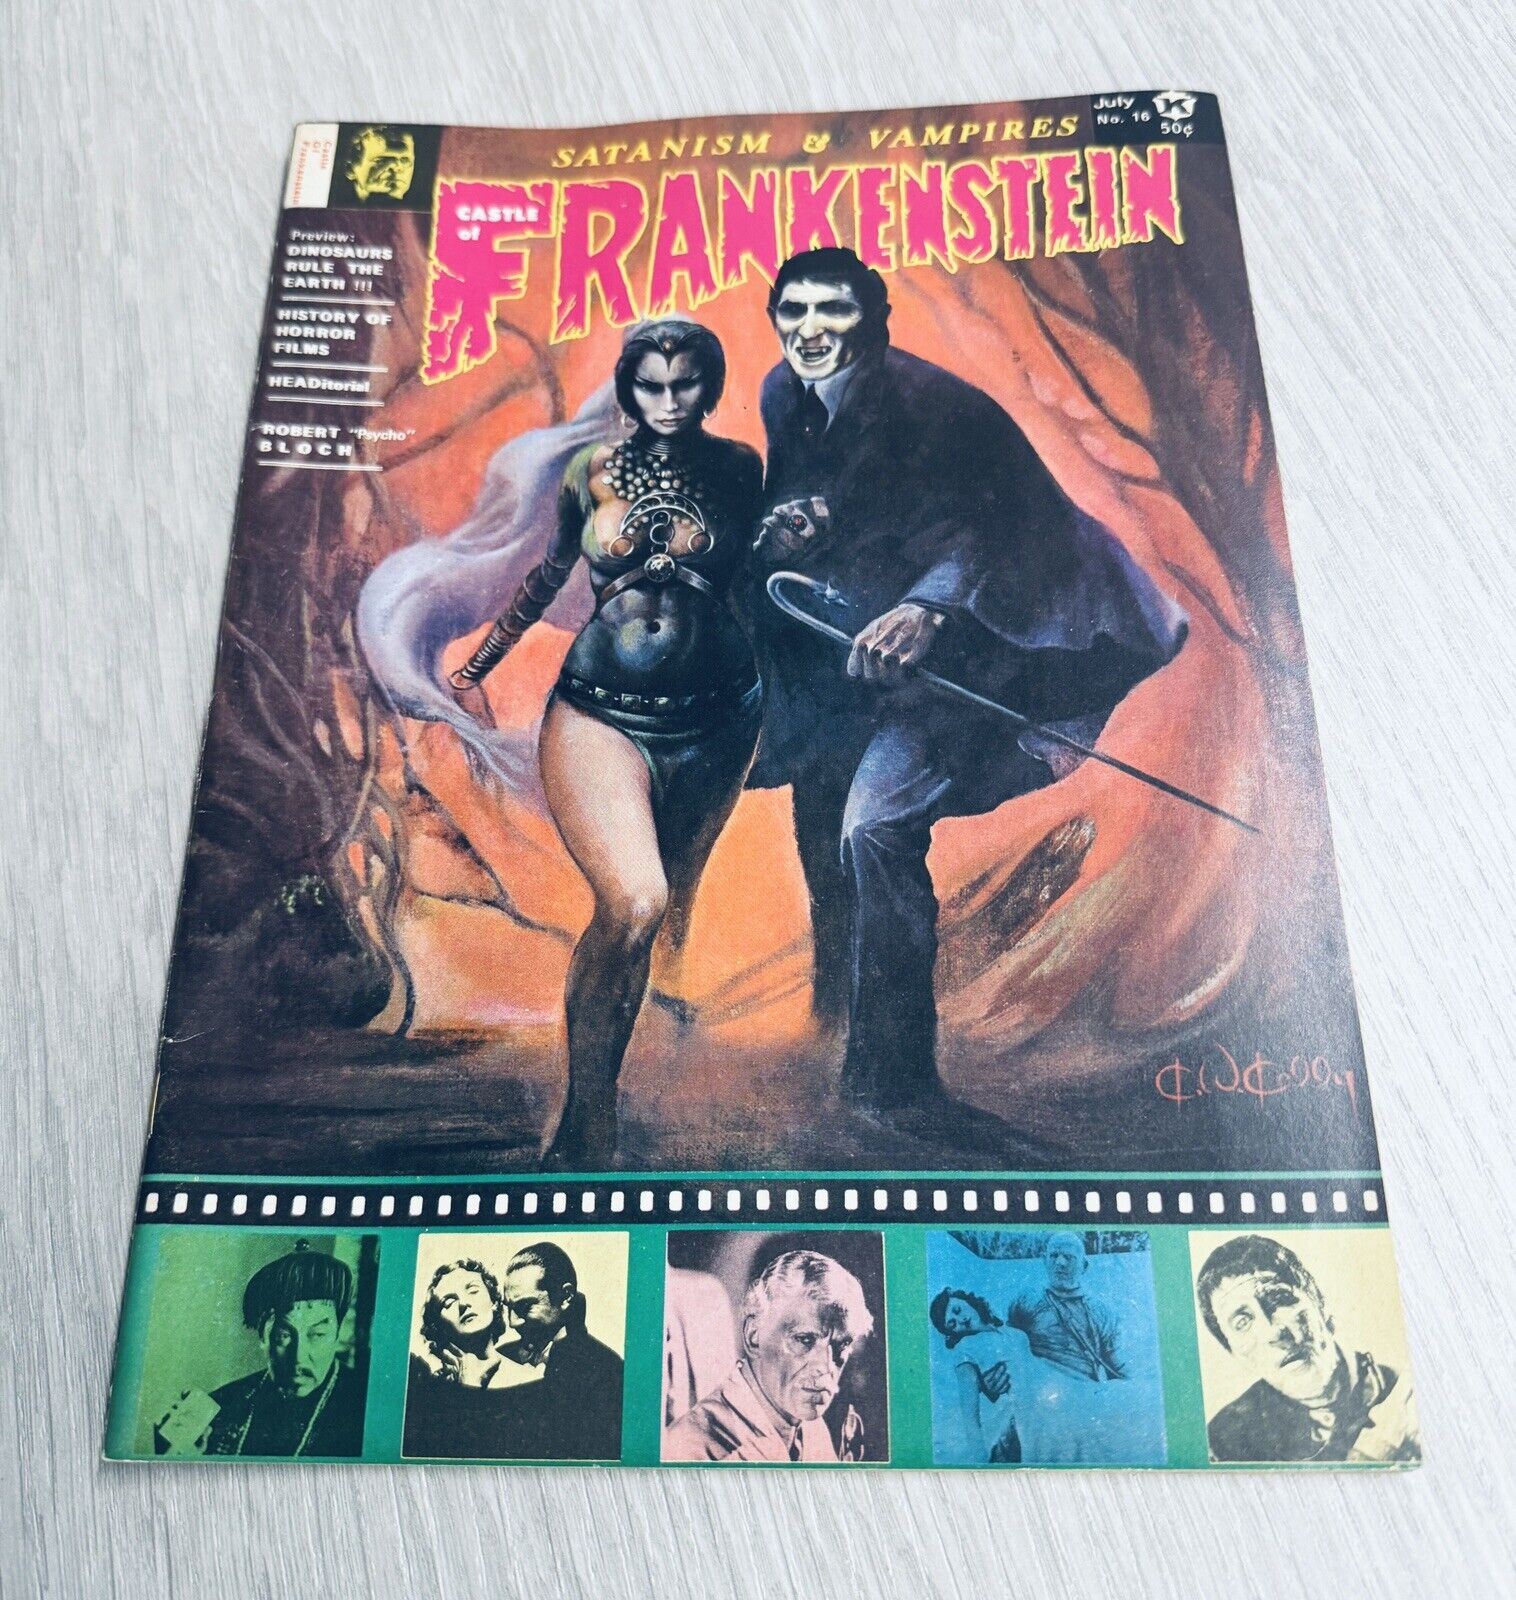 Castle of Frankenstein Magazine #16 (1971) Satanism and Vampires